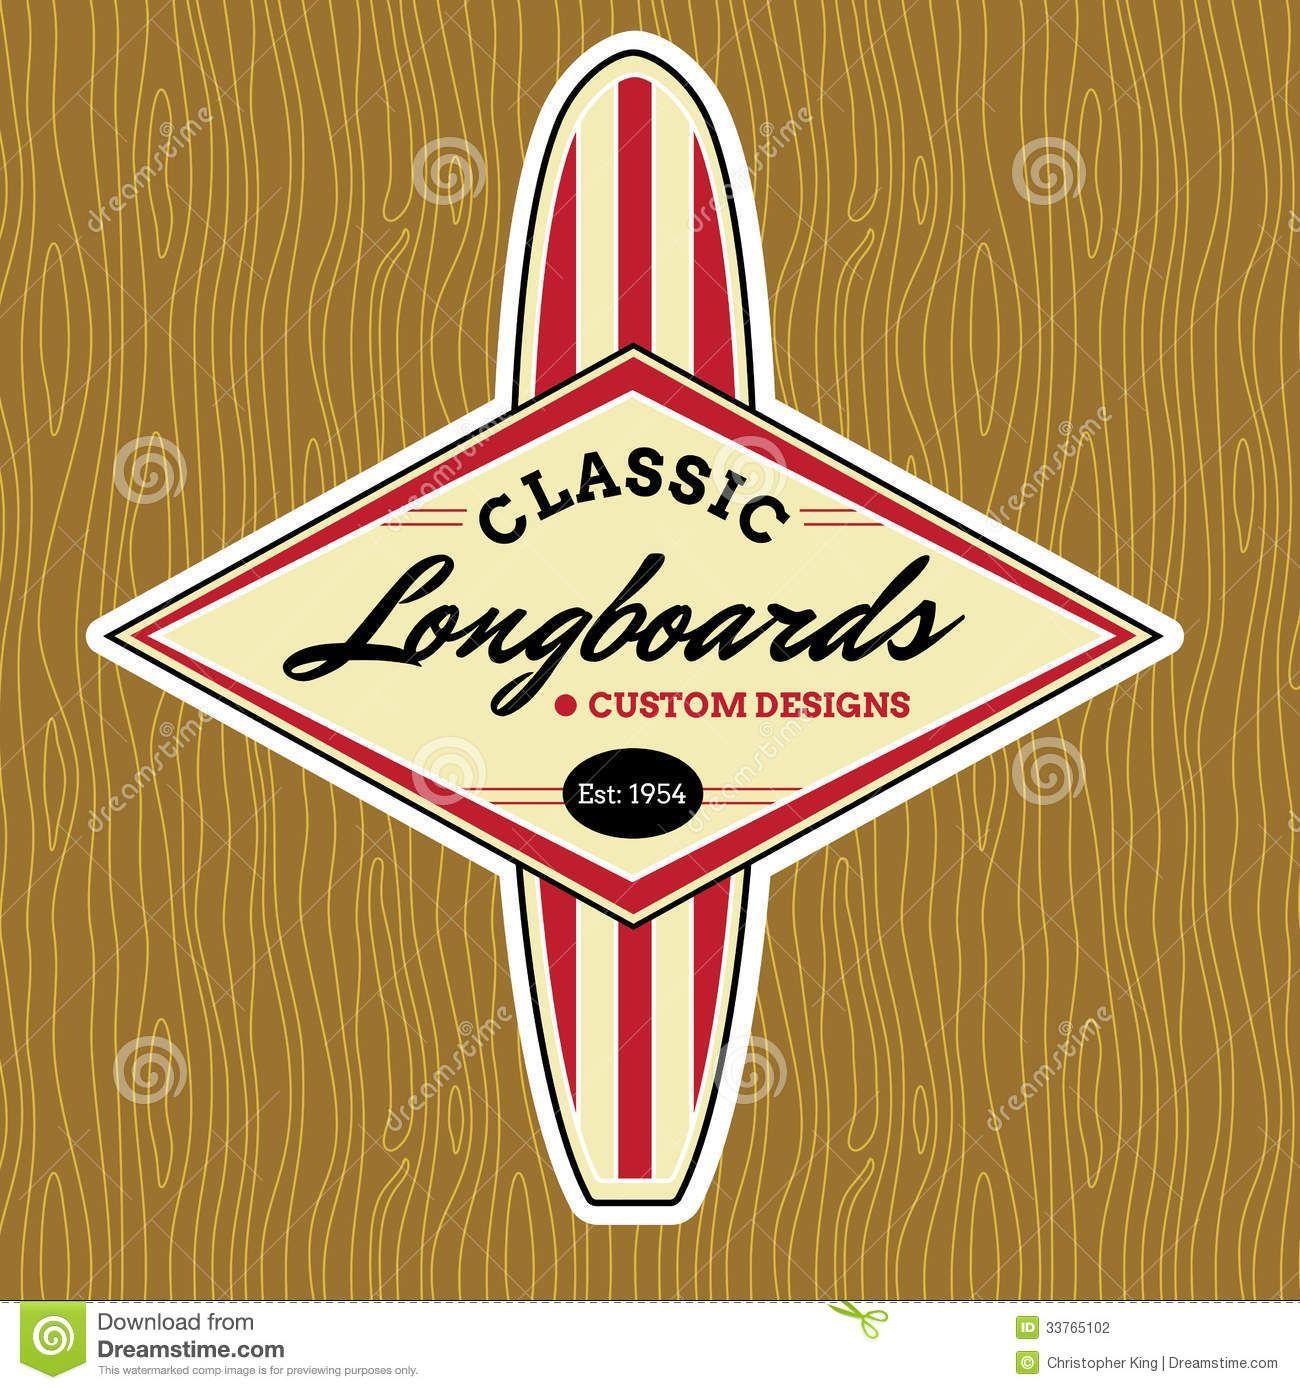 Vintage Surf Logo - Classic Surf Logo Design Royalty Free Stock Photo - Image: 33765155 ...